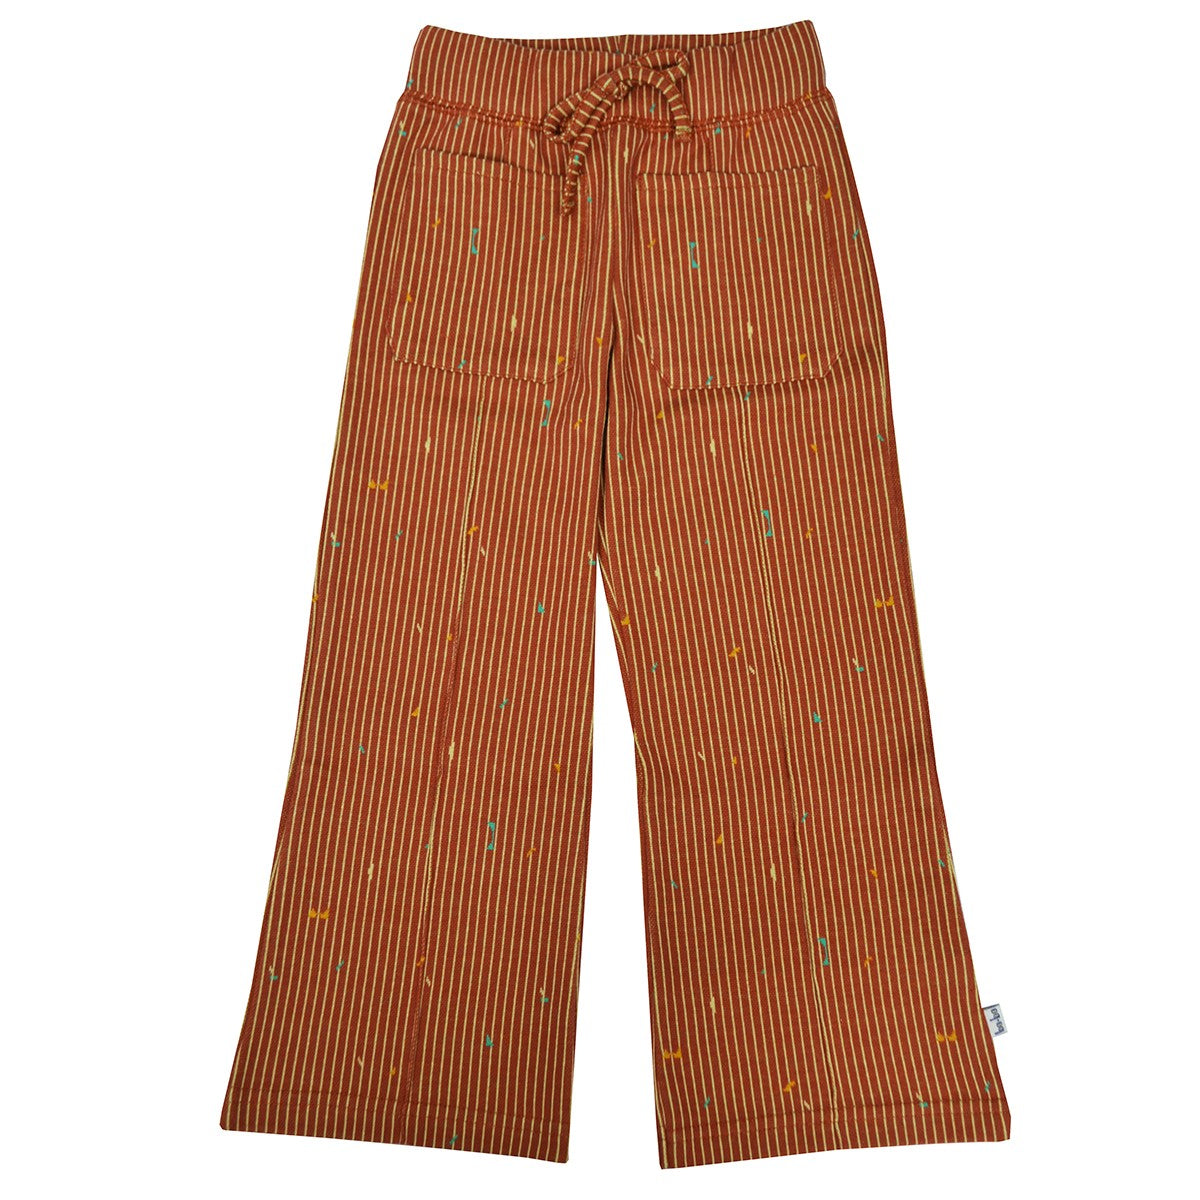 Baba Kidswear - Pocket Pants Playfull Lines Brown